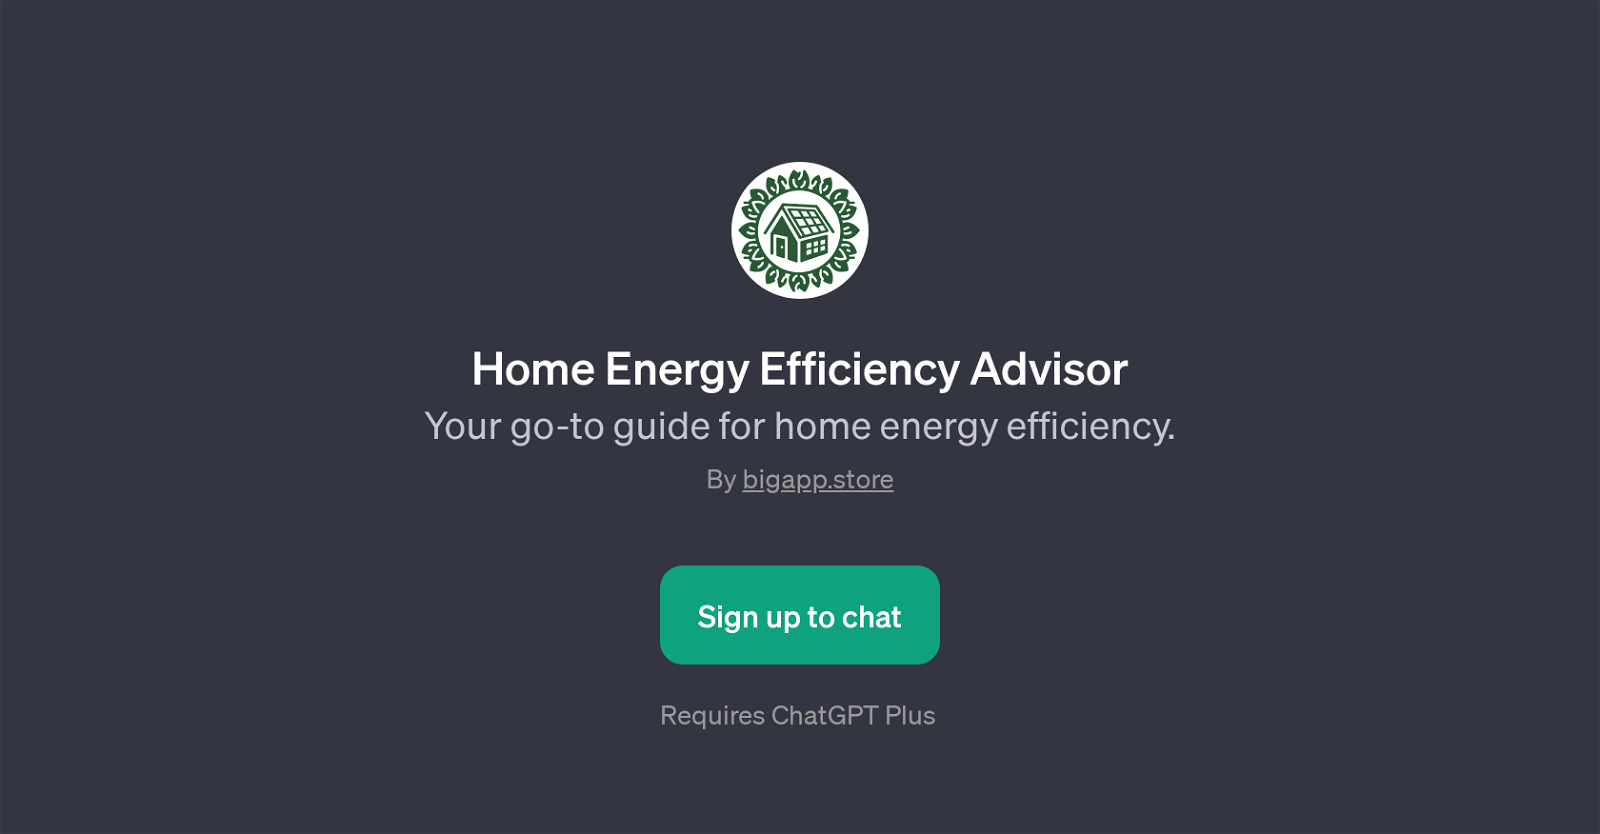 Home Energy Efficiency Advisor website